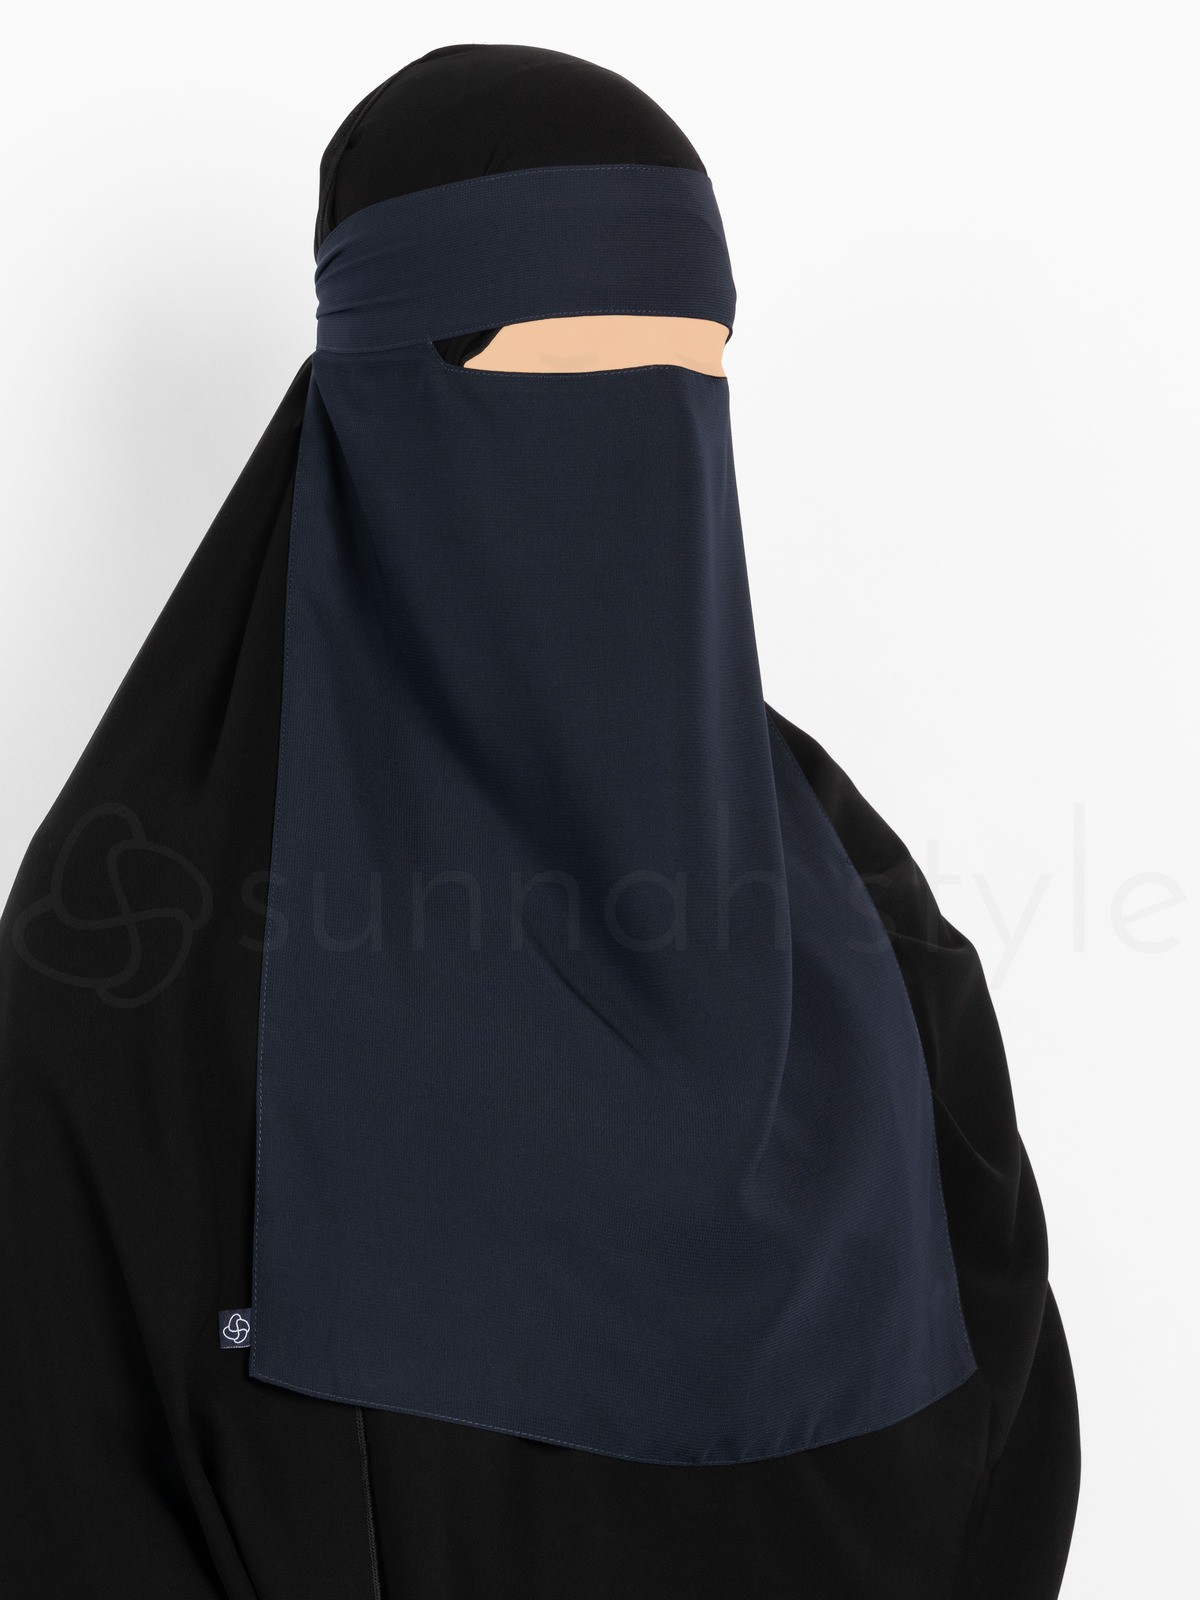 Sunnah Style - Narrow No-Pinch One Layer Niqab (Navy Blue)